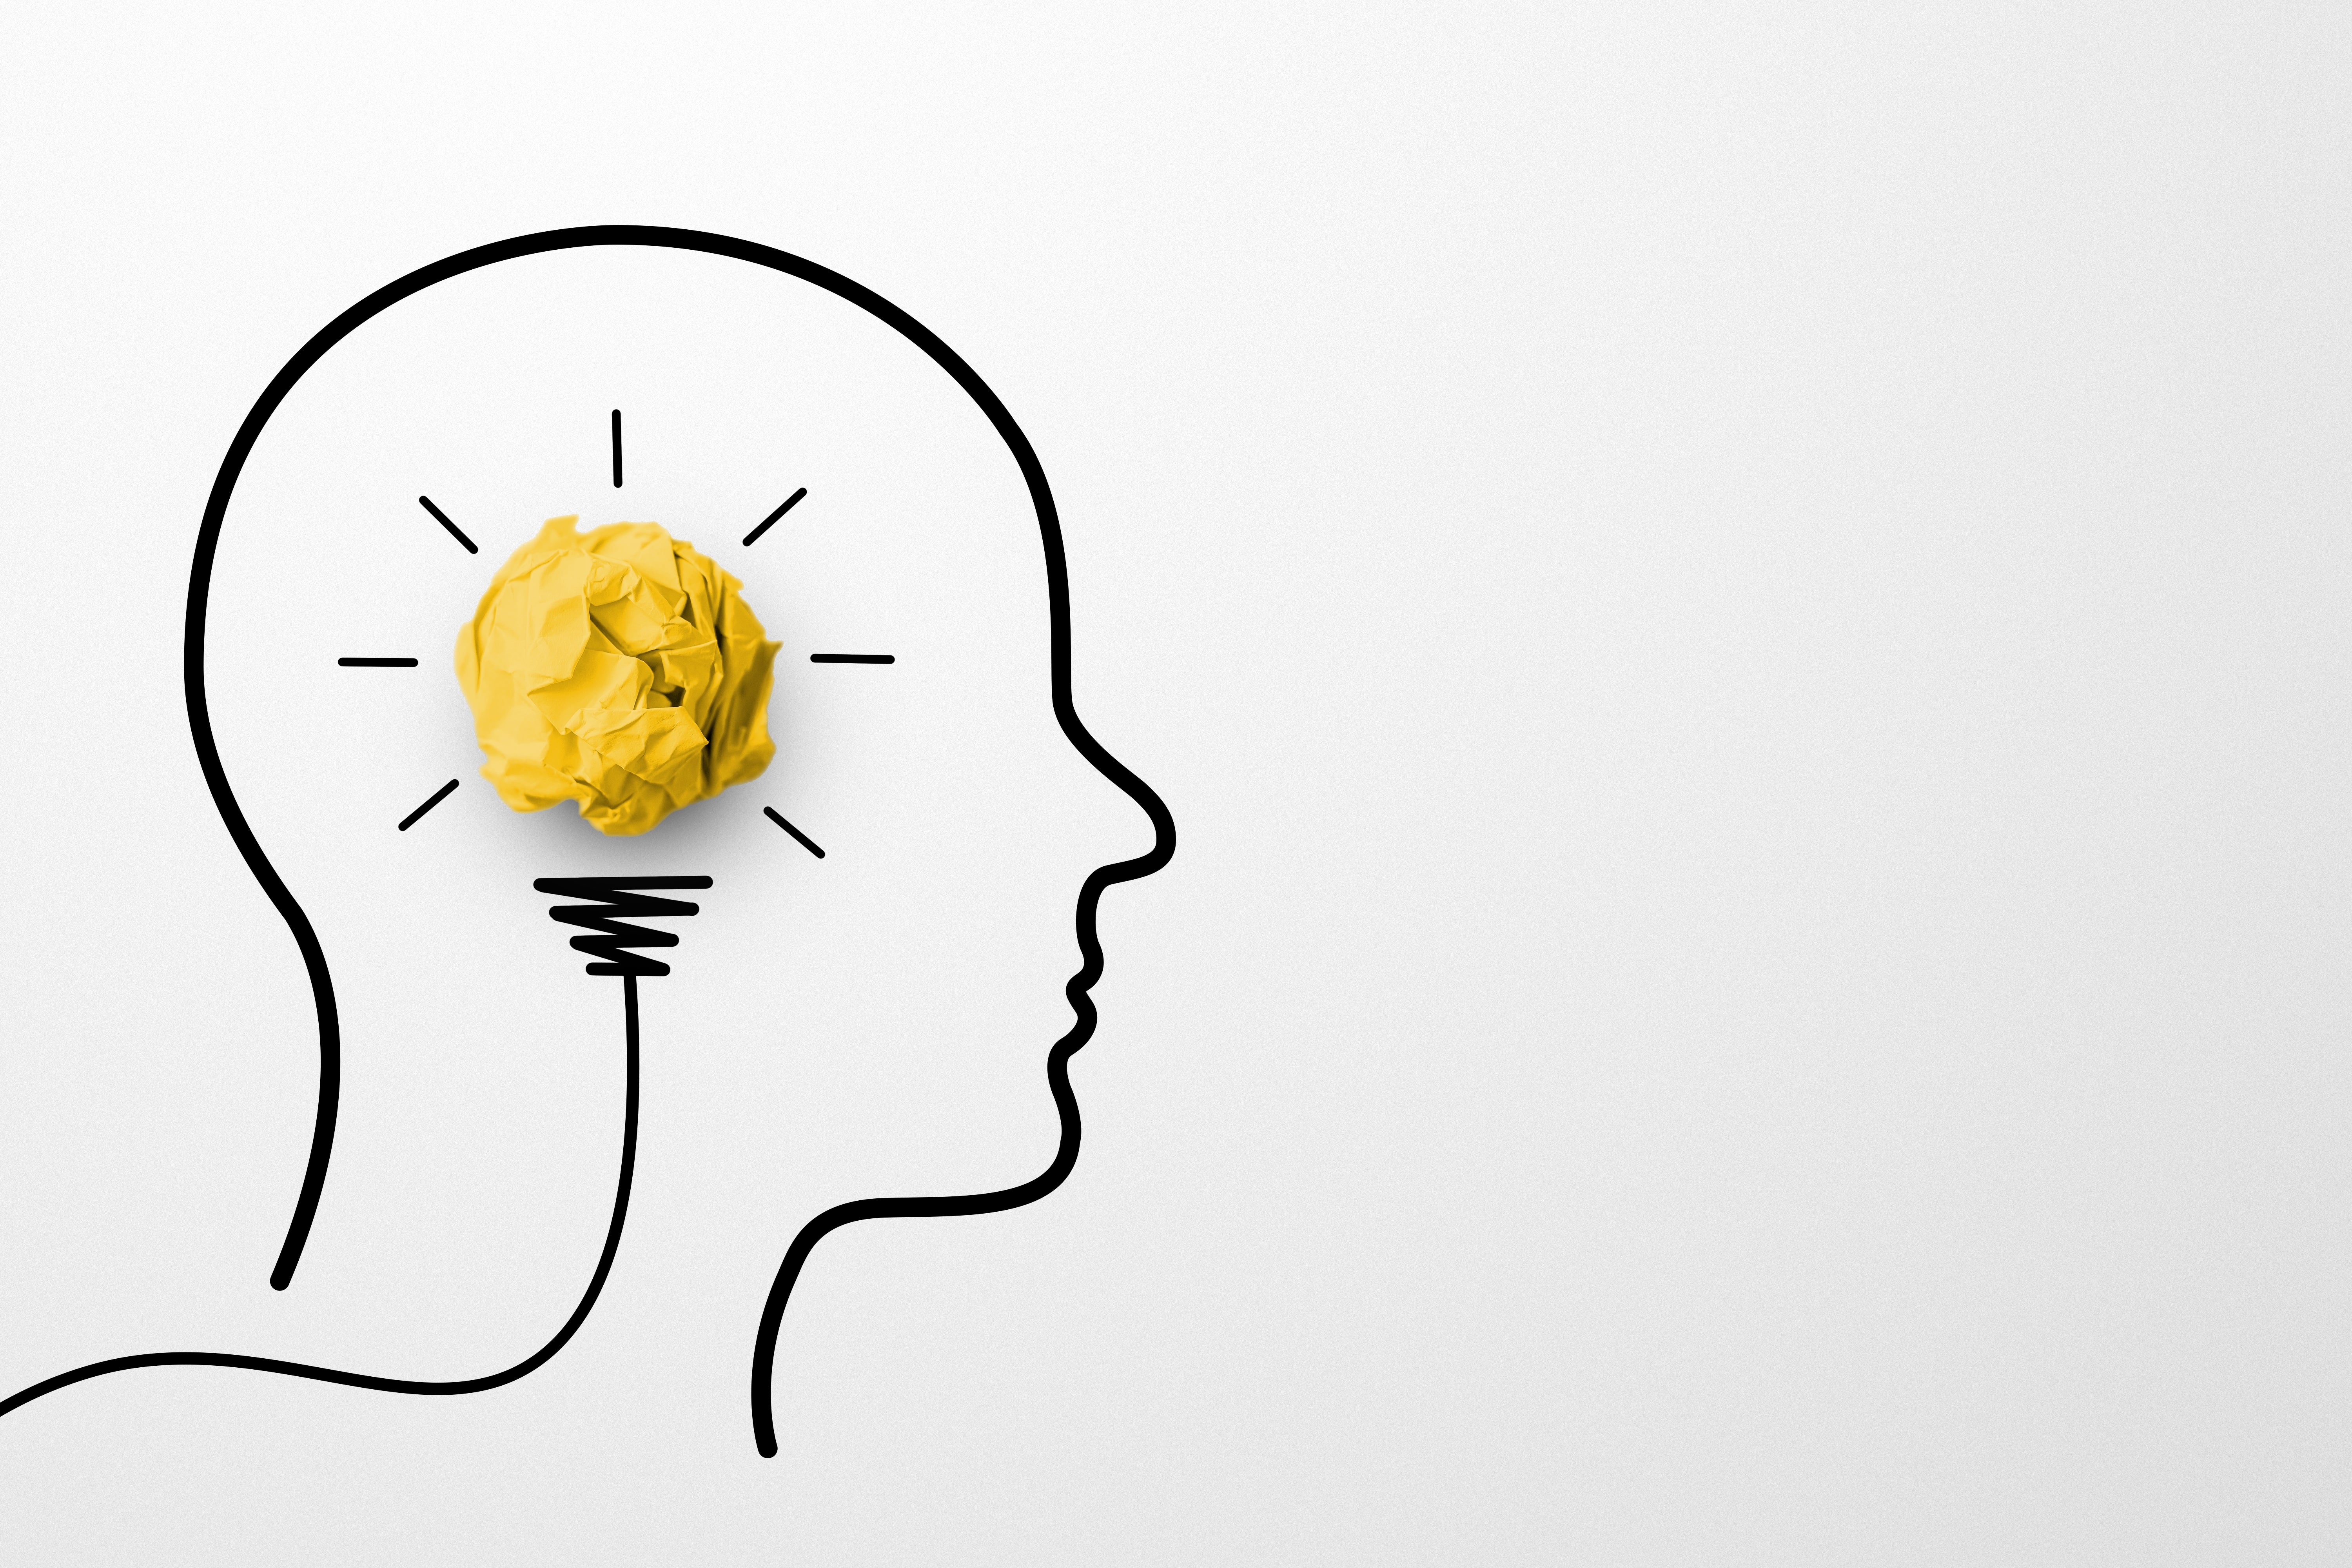 Yellow paper scrap ball resembling a light bulb inside a human drawn head. 